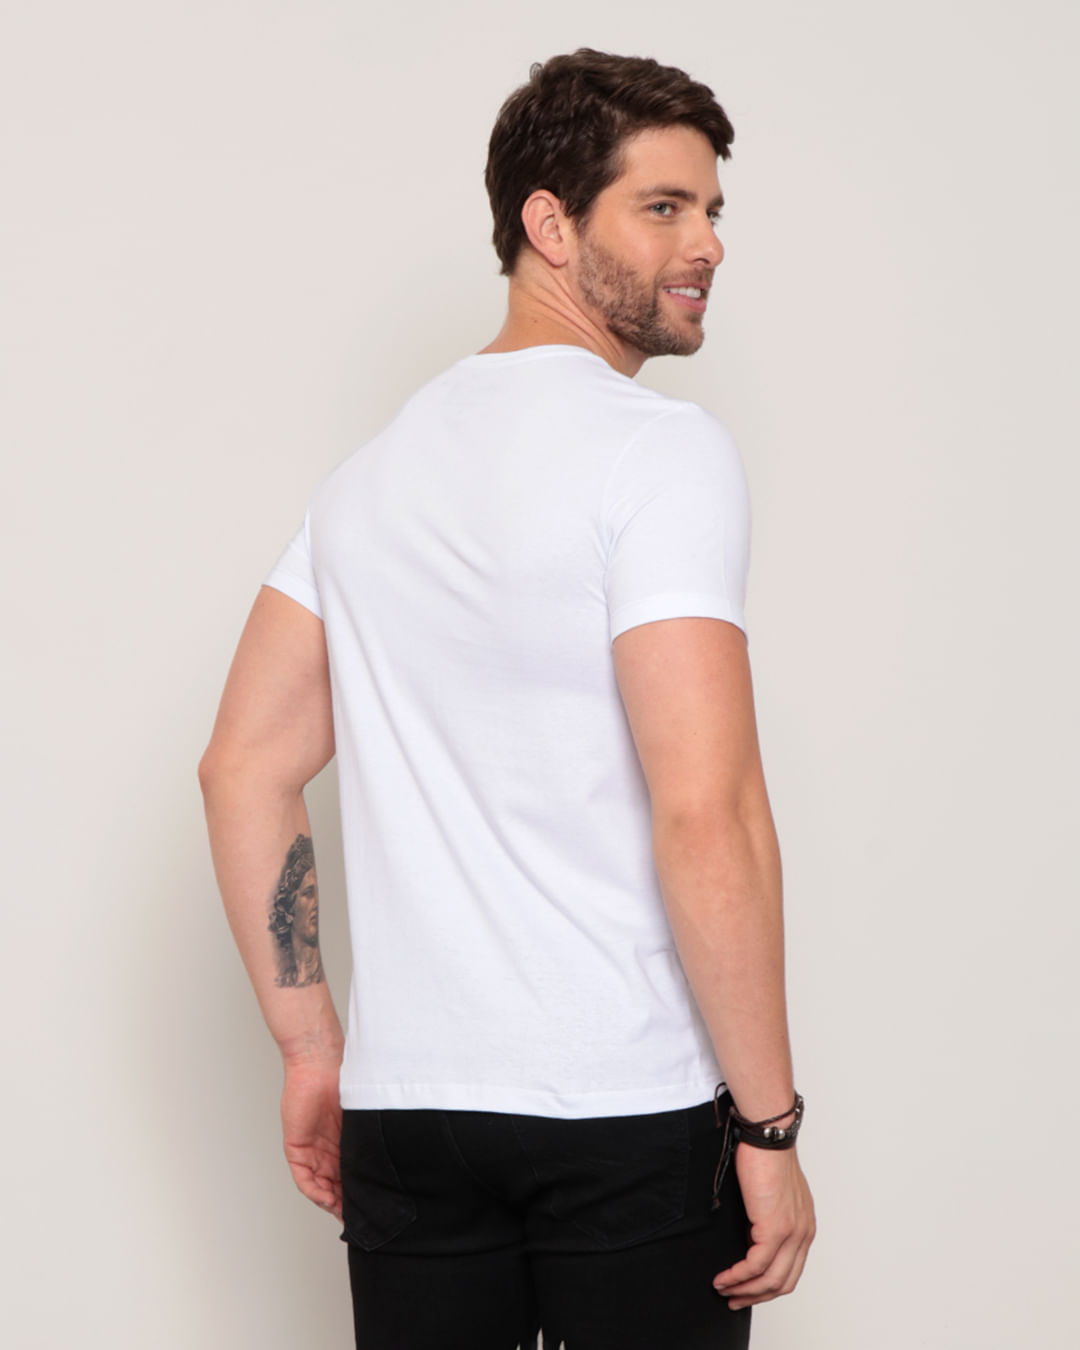 Homem Aranha - Camiseta Manga Longa 01486 Branco - Branco